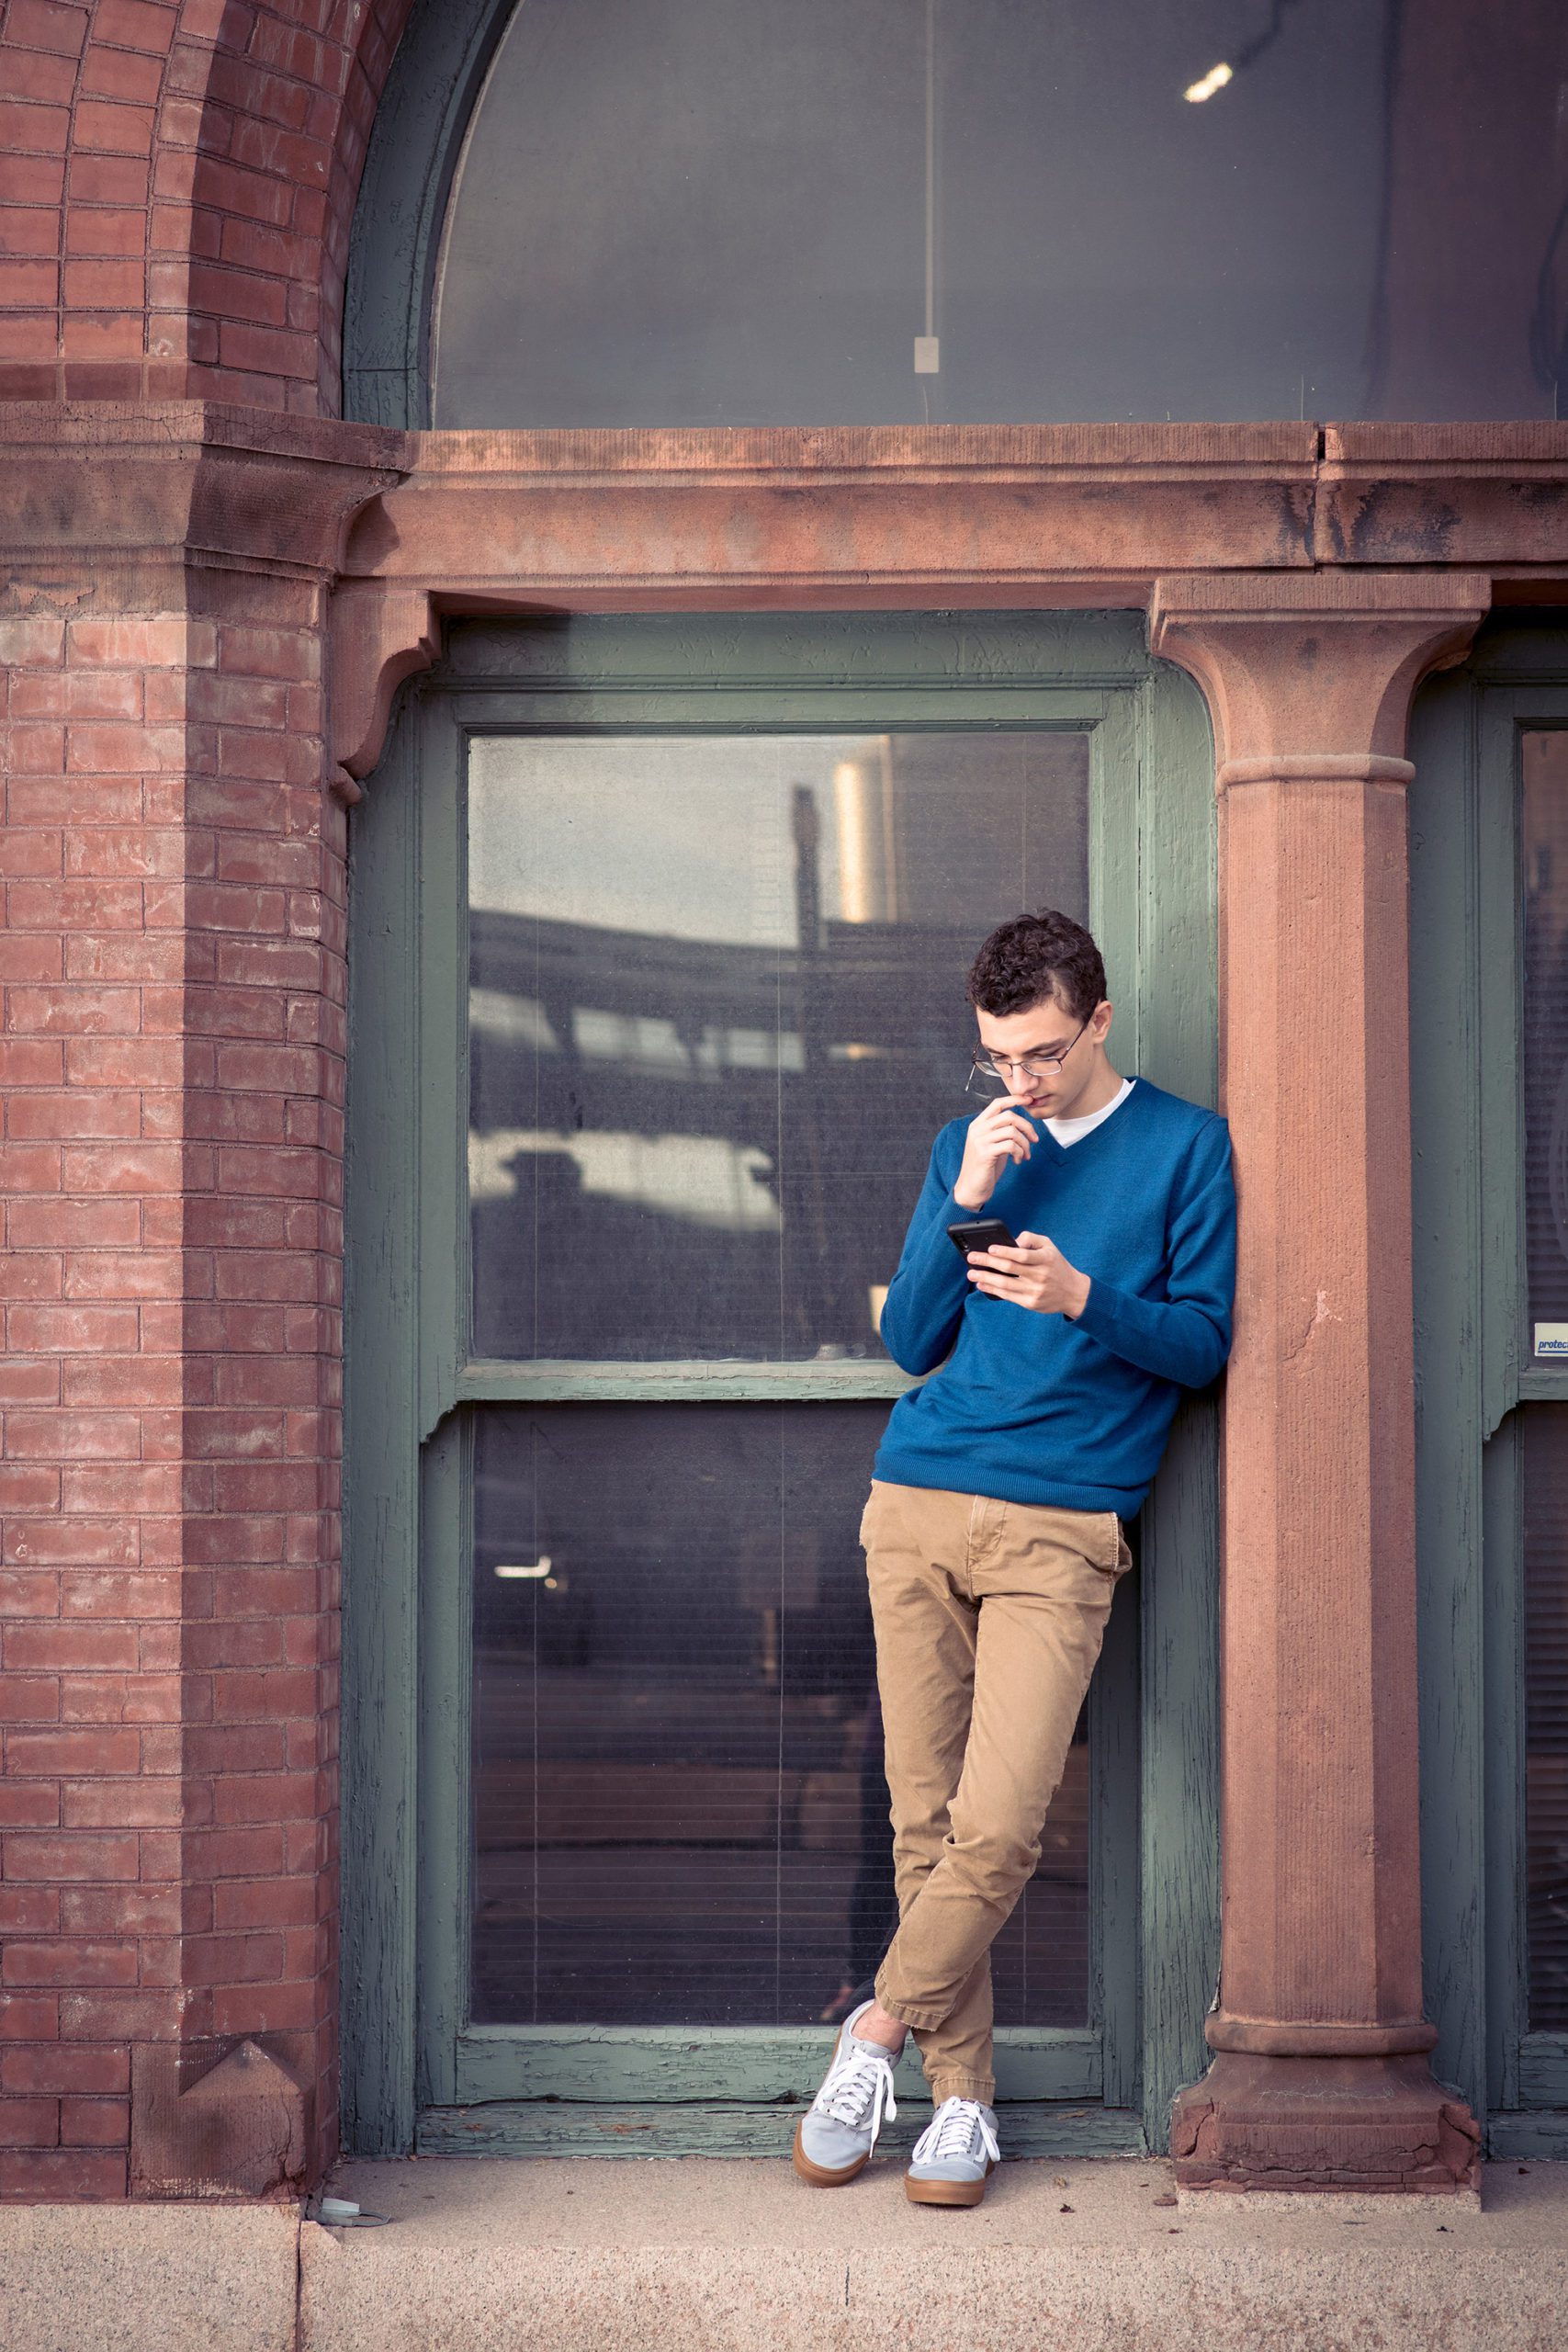 Senior Boy standing in window frame looking at phone.